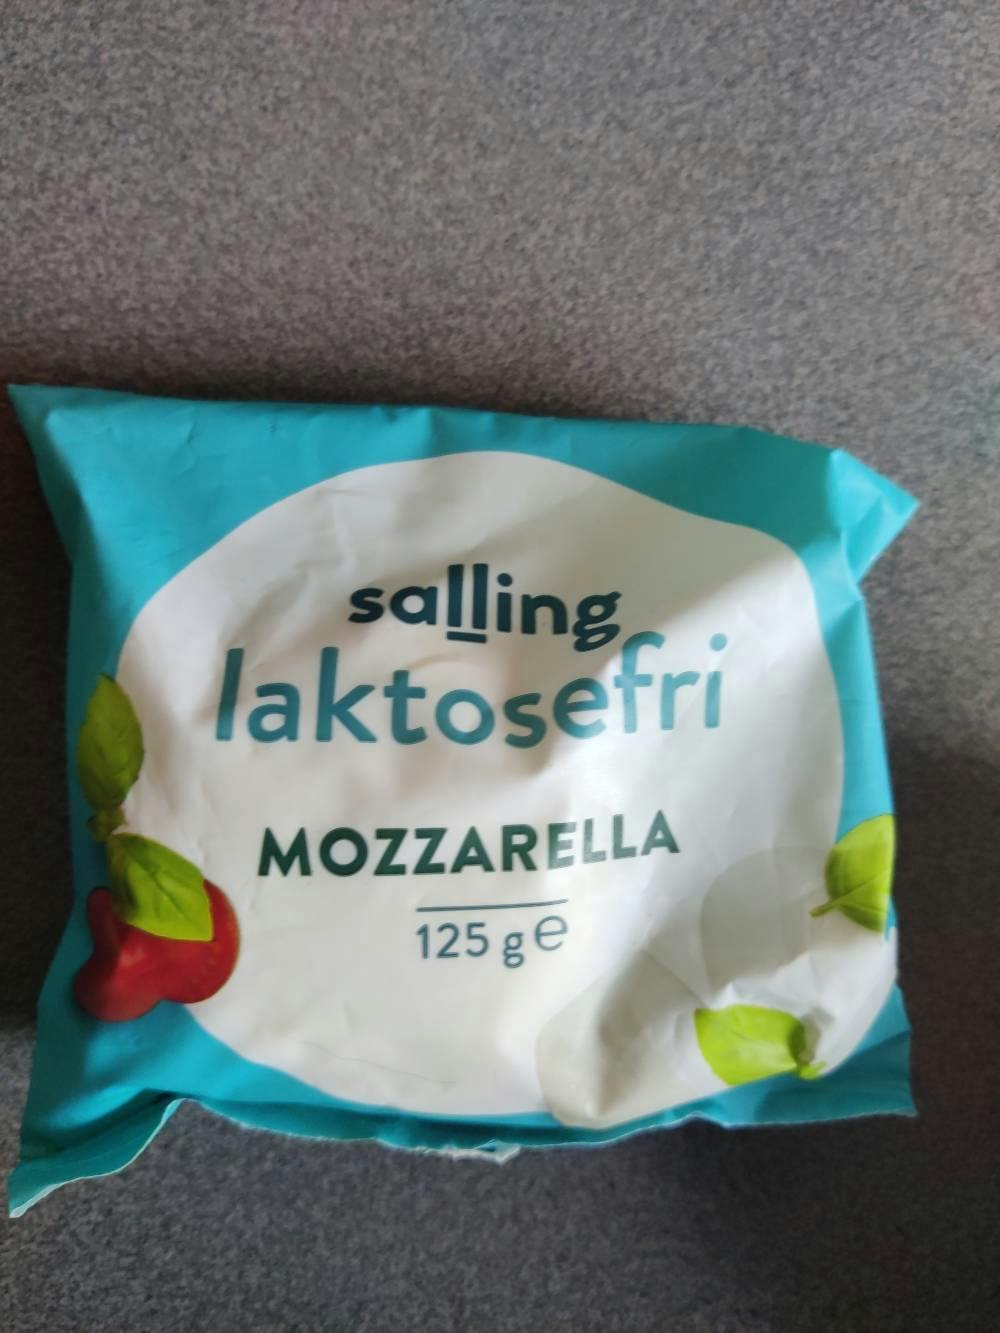 Laktosefri Mozzarella, Salling